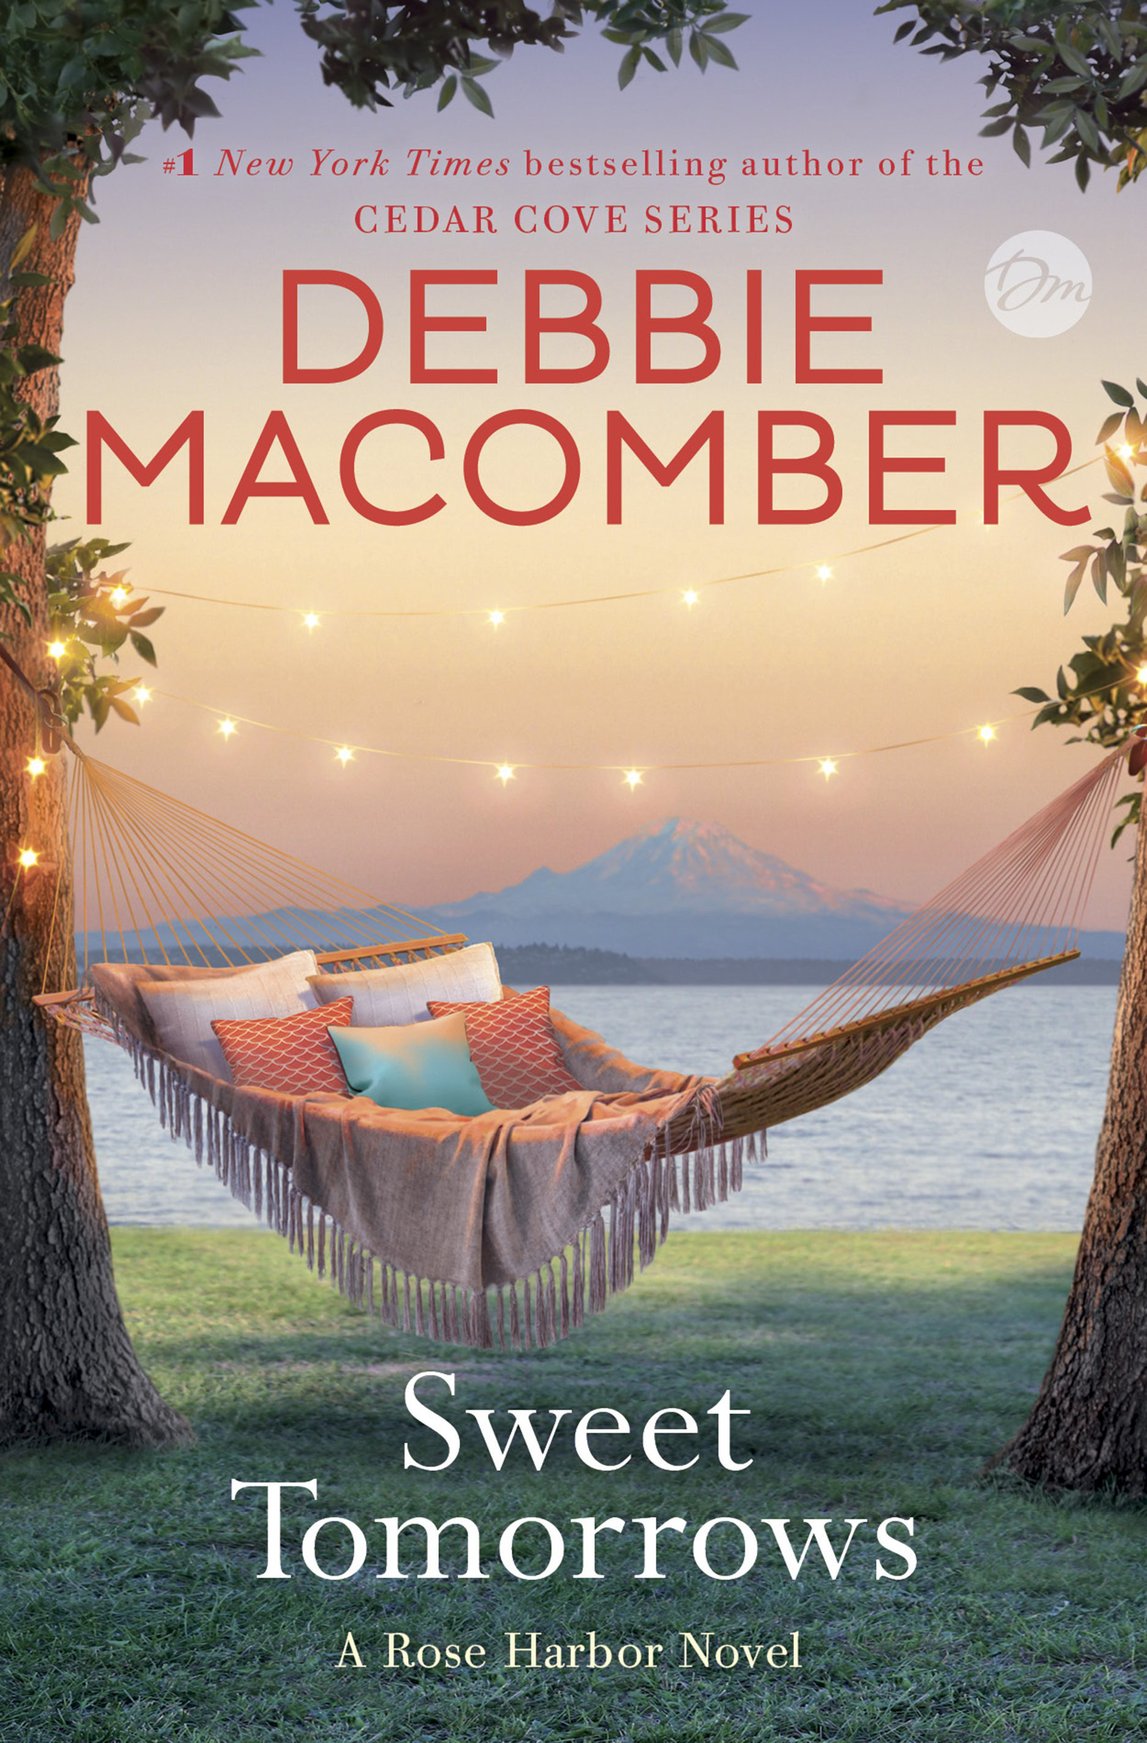 Sweet Tomorrows (2016) by Debbie Macomber